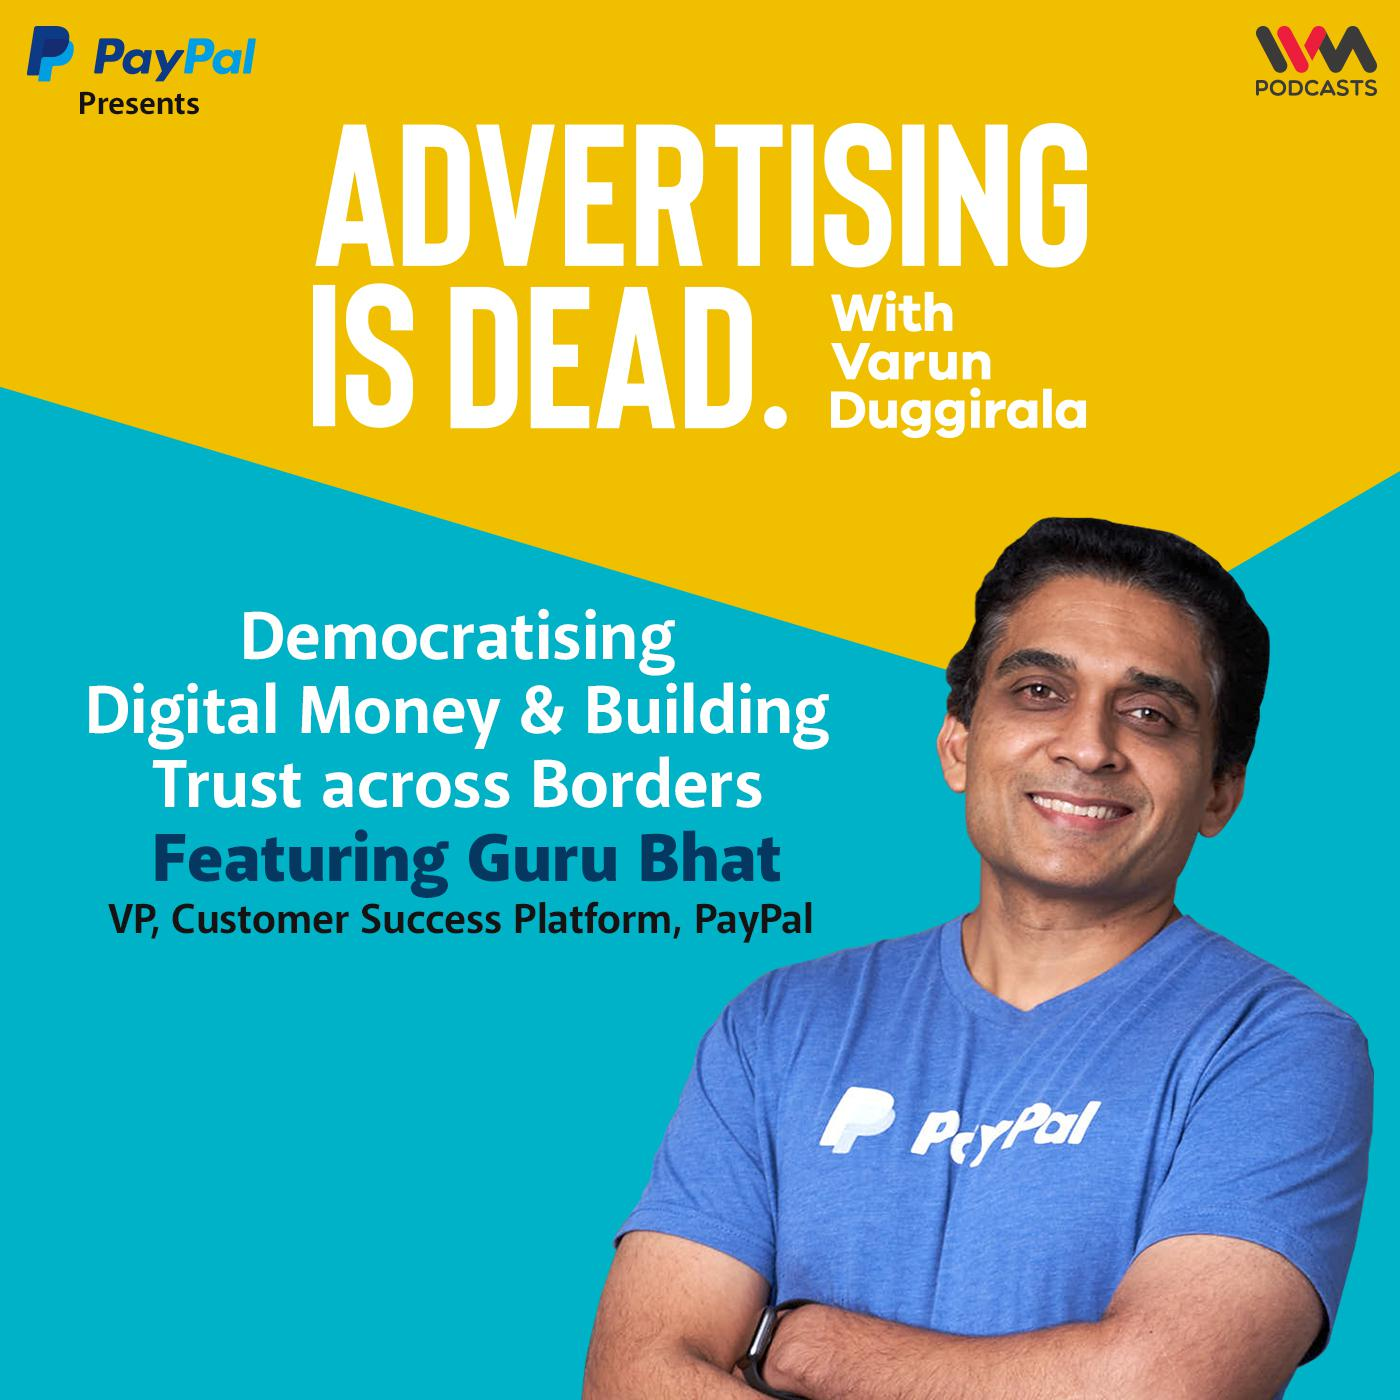 Guru Bhat on Democratising Digital Money & Building Trust across Borders